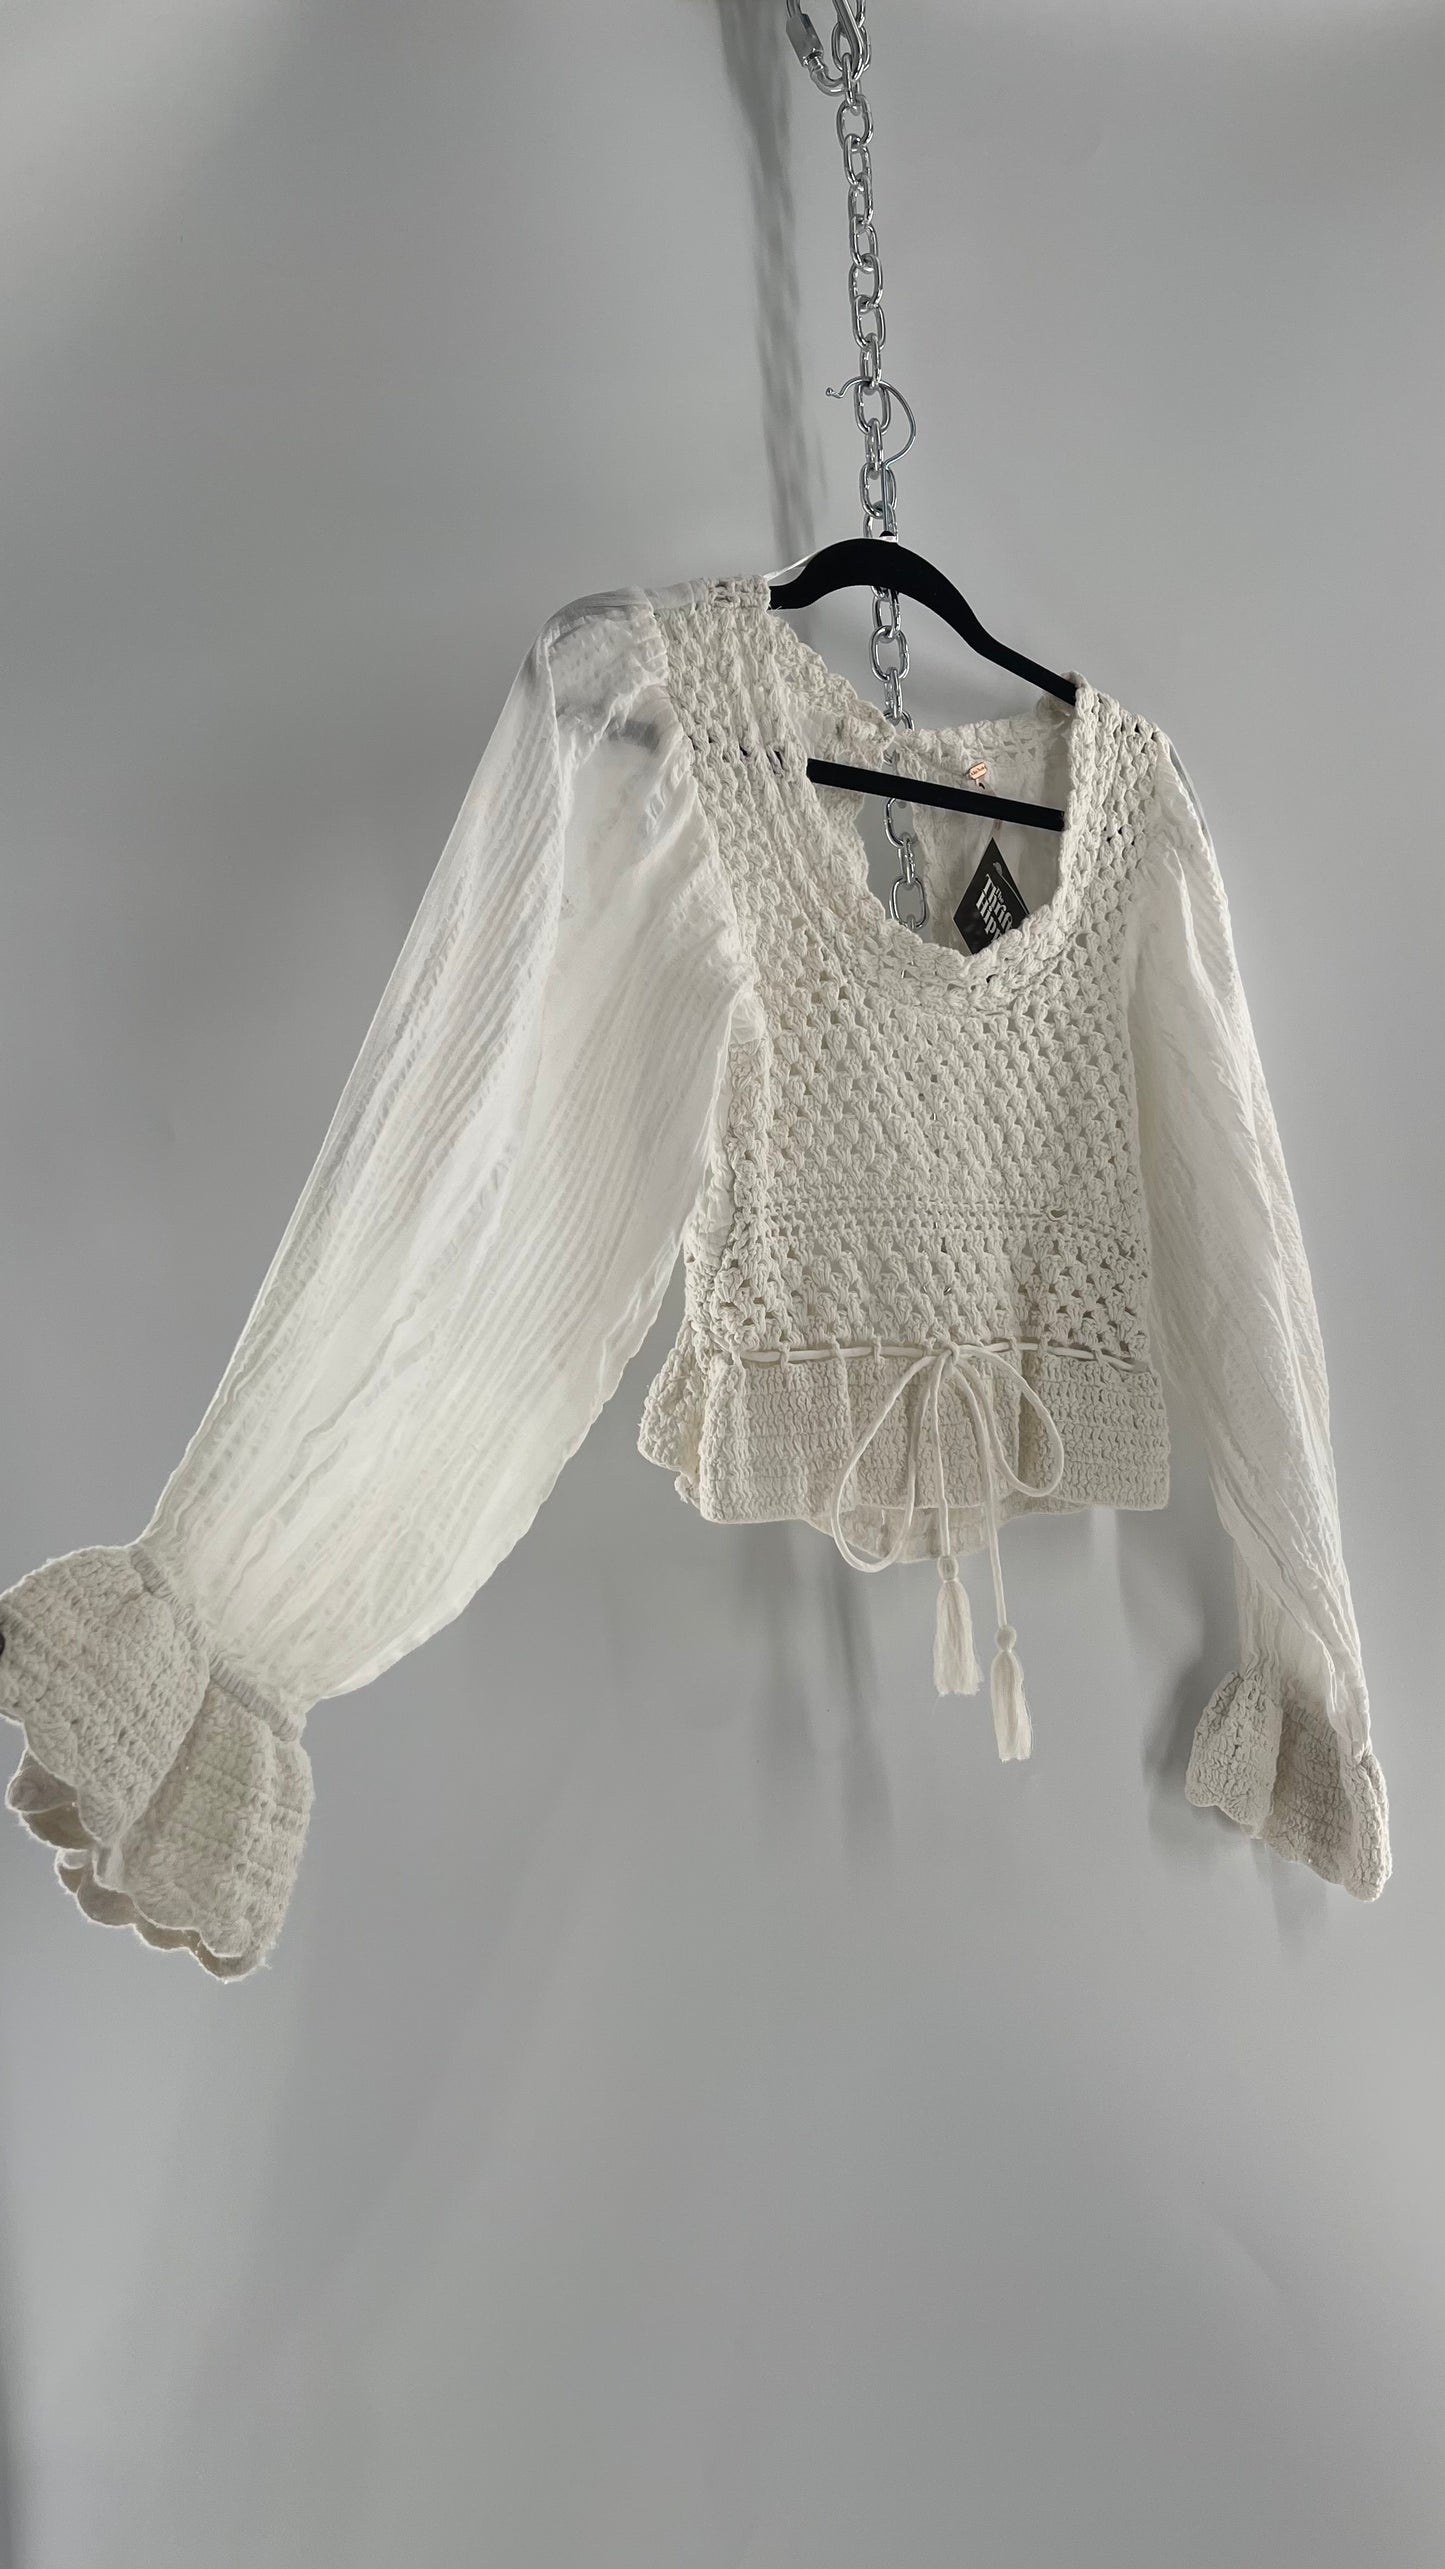 Free People White Crochet “Megan” Top (Small)